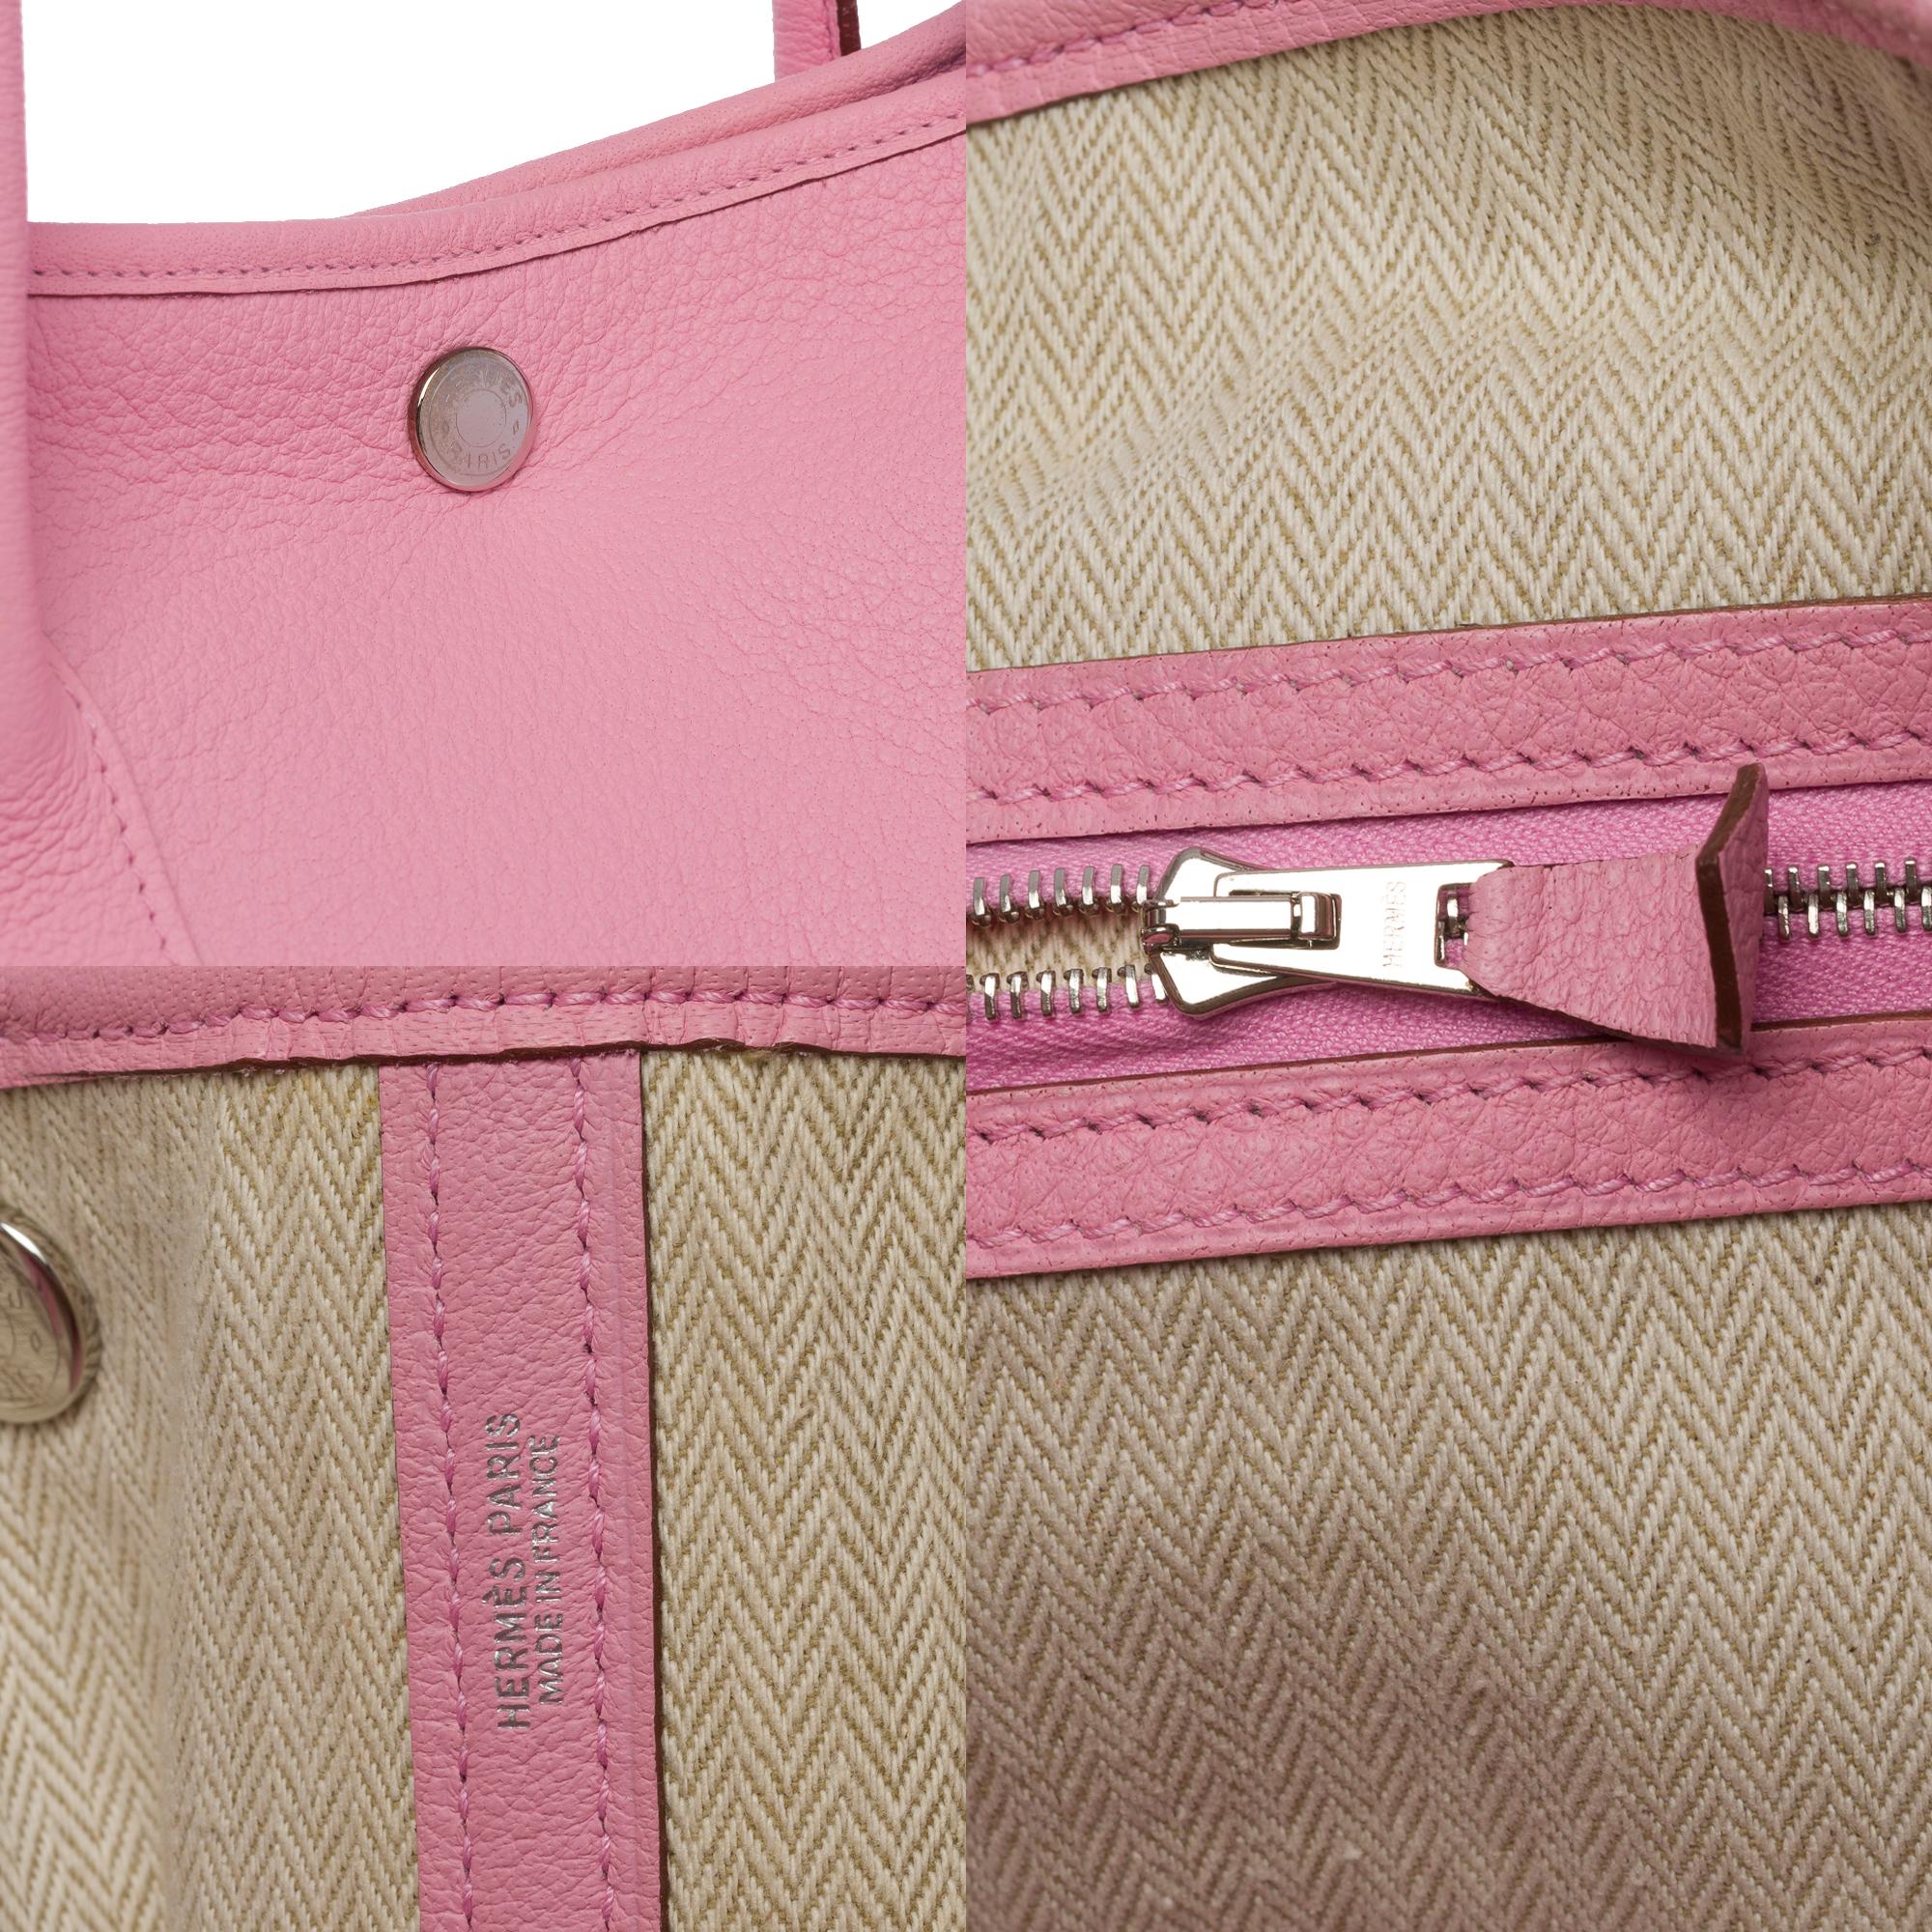 Gorgeous Hermès Garden Party 36 Tote bag in Sakura Pink Negonda leather, SHW 1